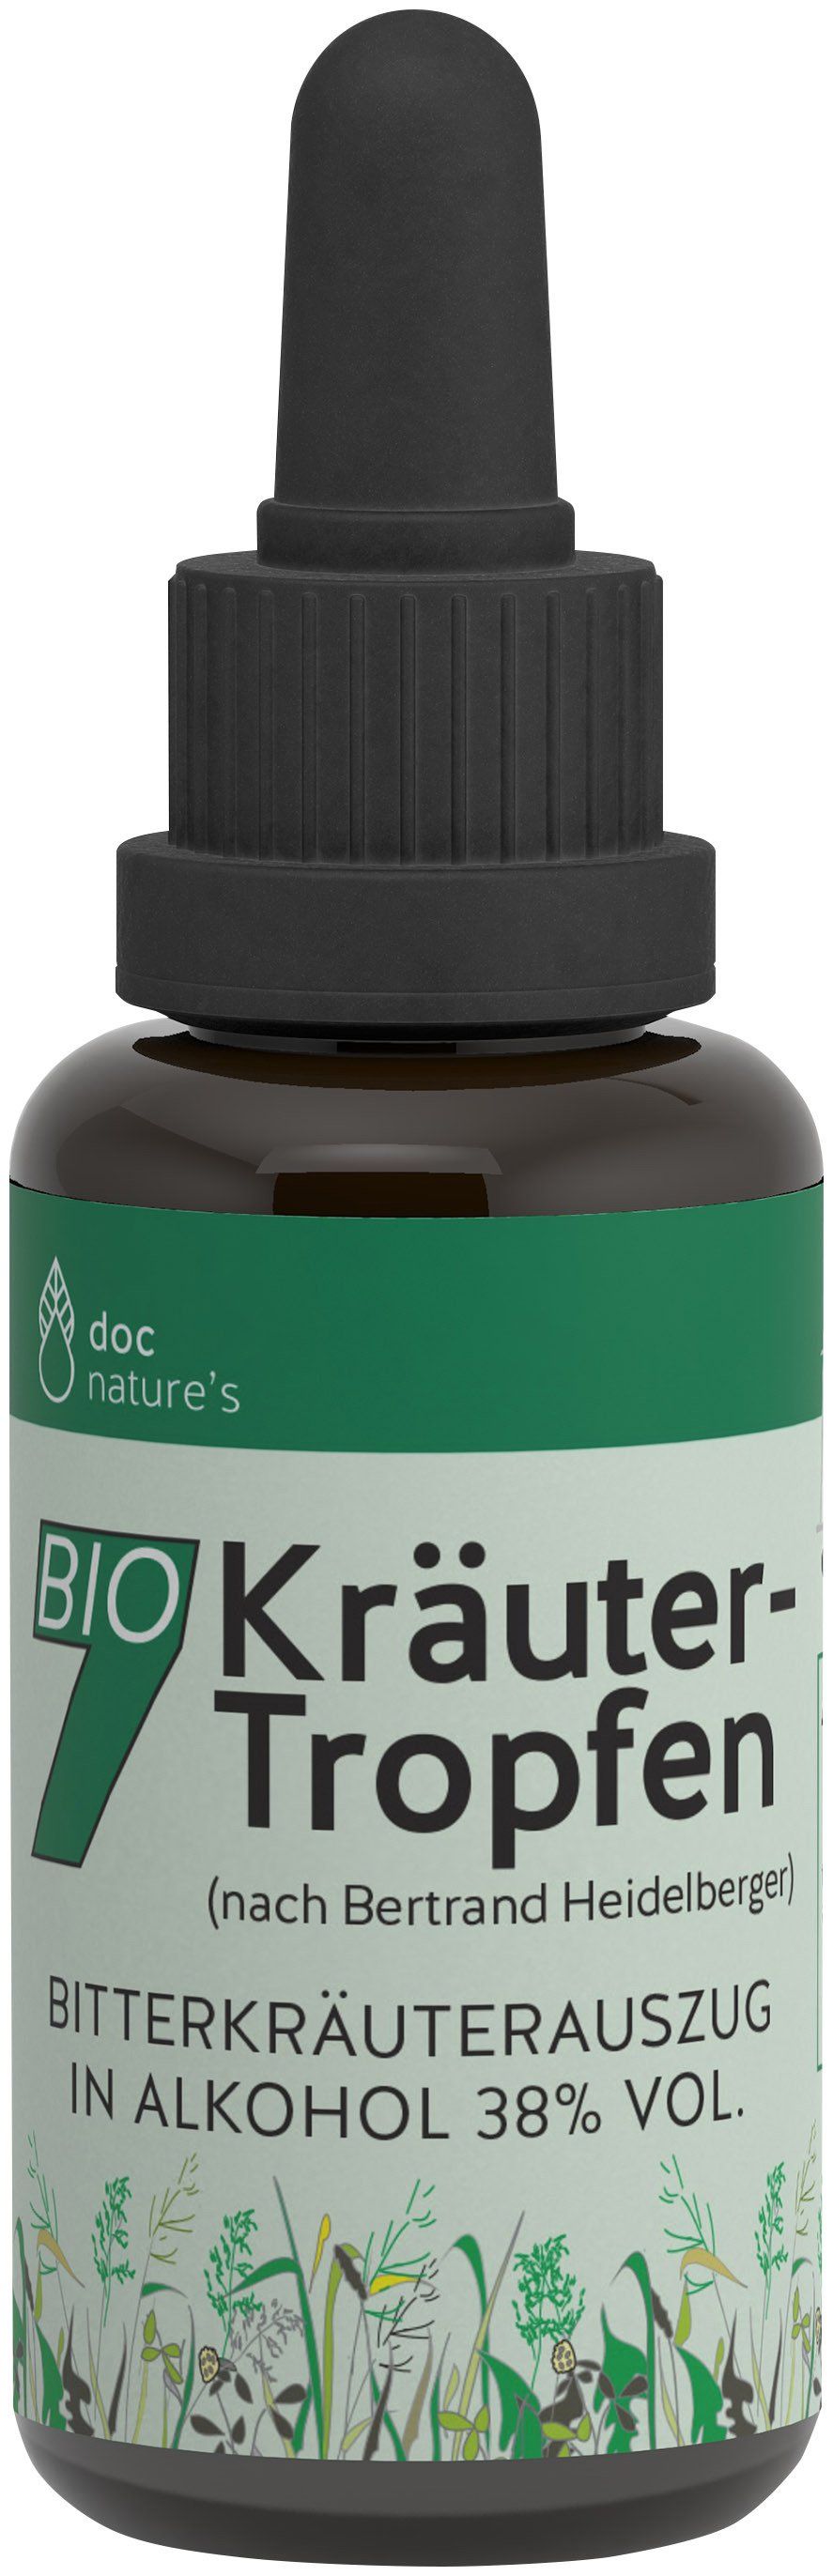 doc nature's  BIO 7 Kräuter-Tropfen